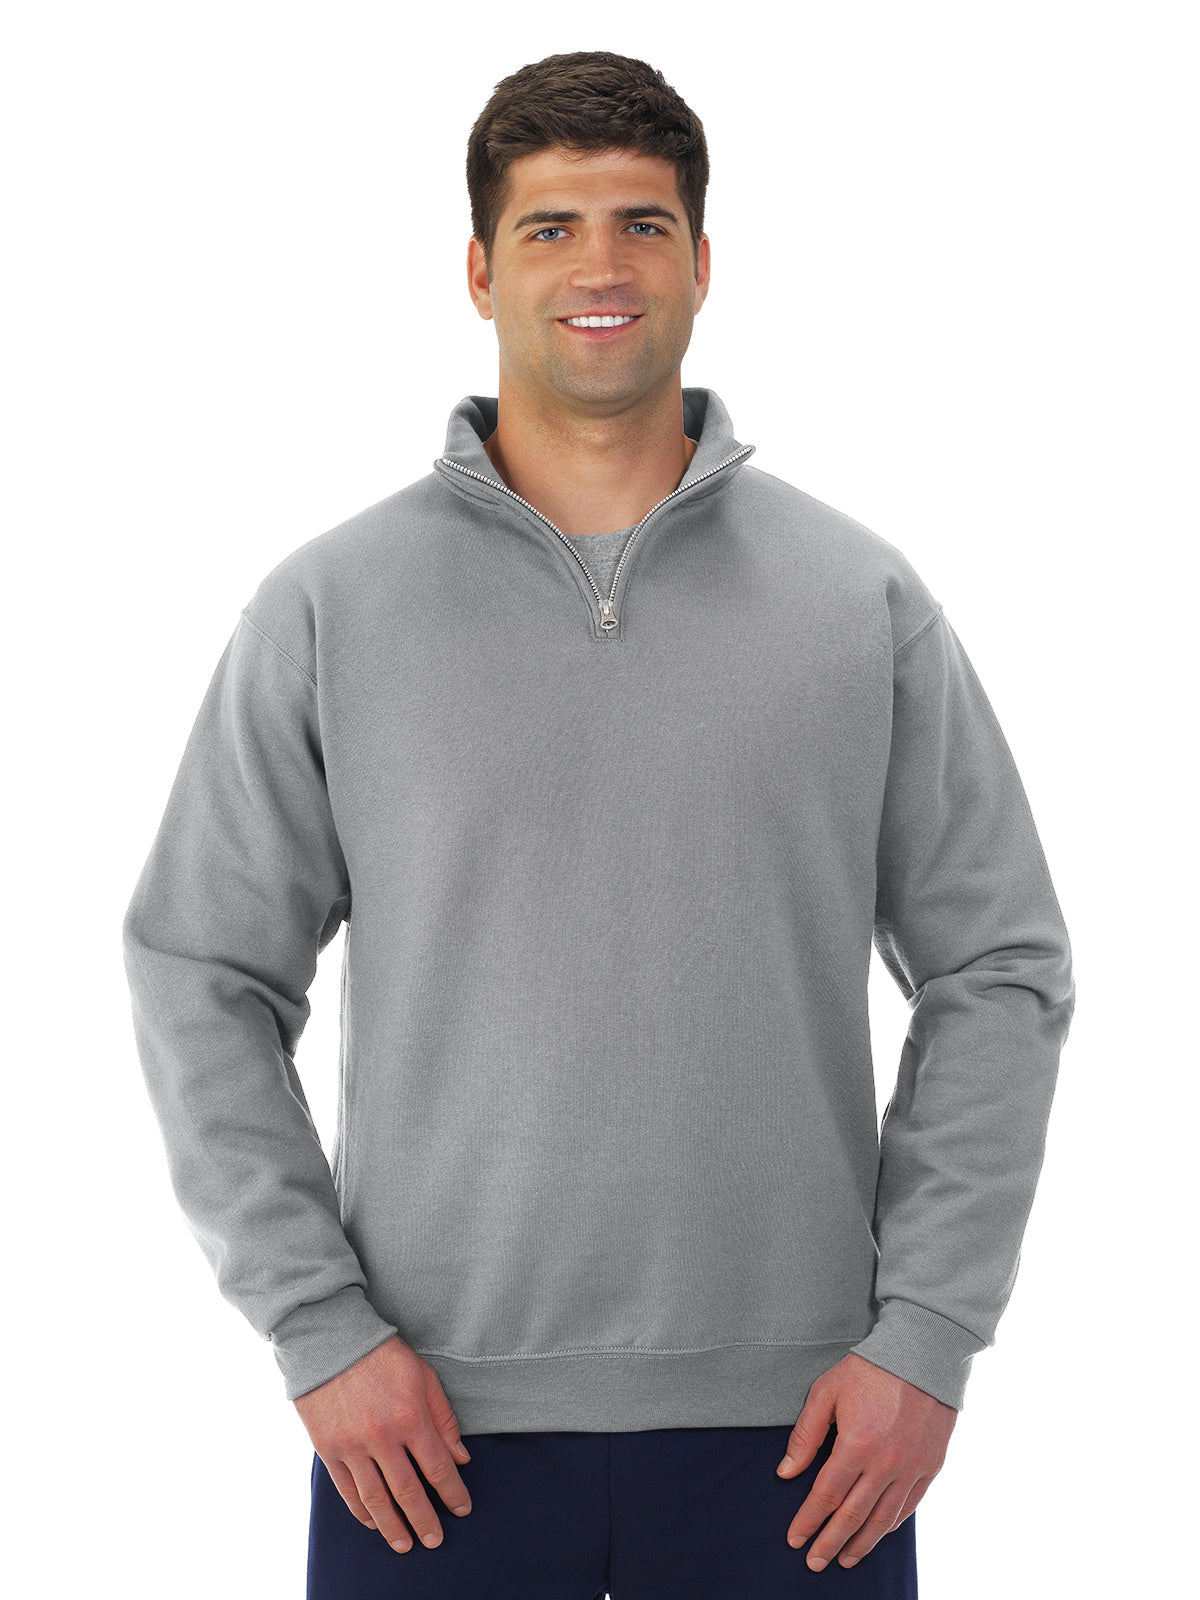 JZ995MR - Jerzees Mens NuBlend Quarter Zip Cadet Collar Sweatshirt